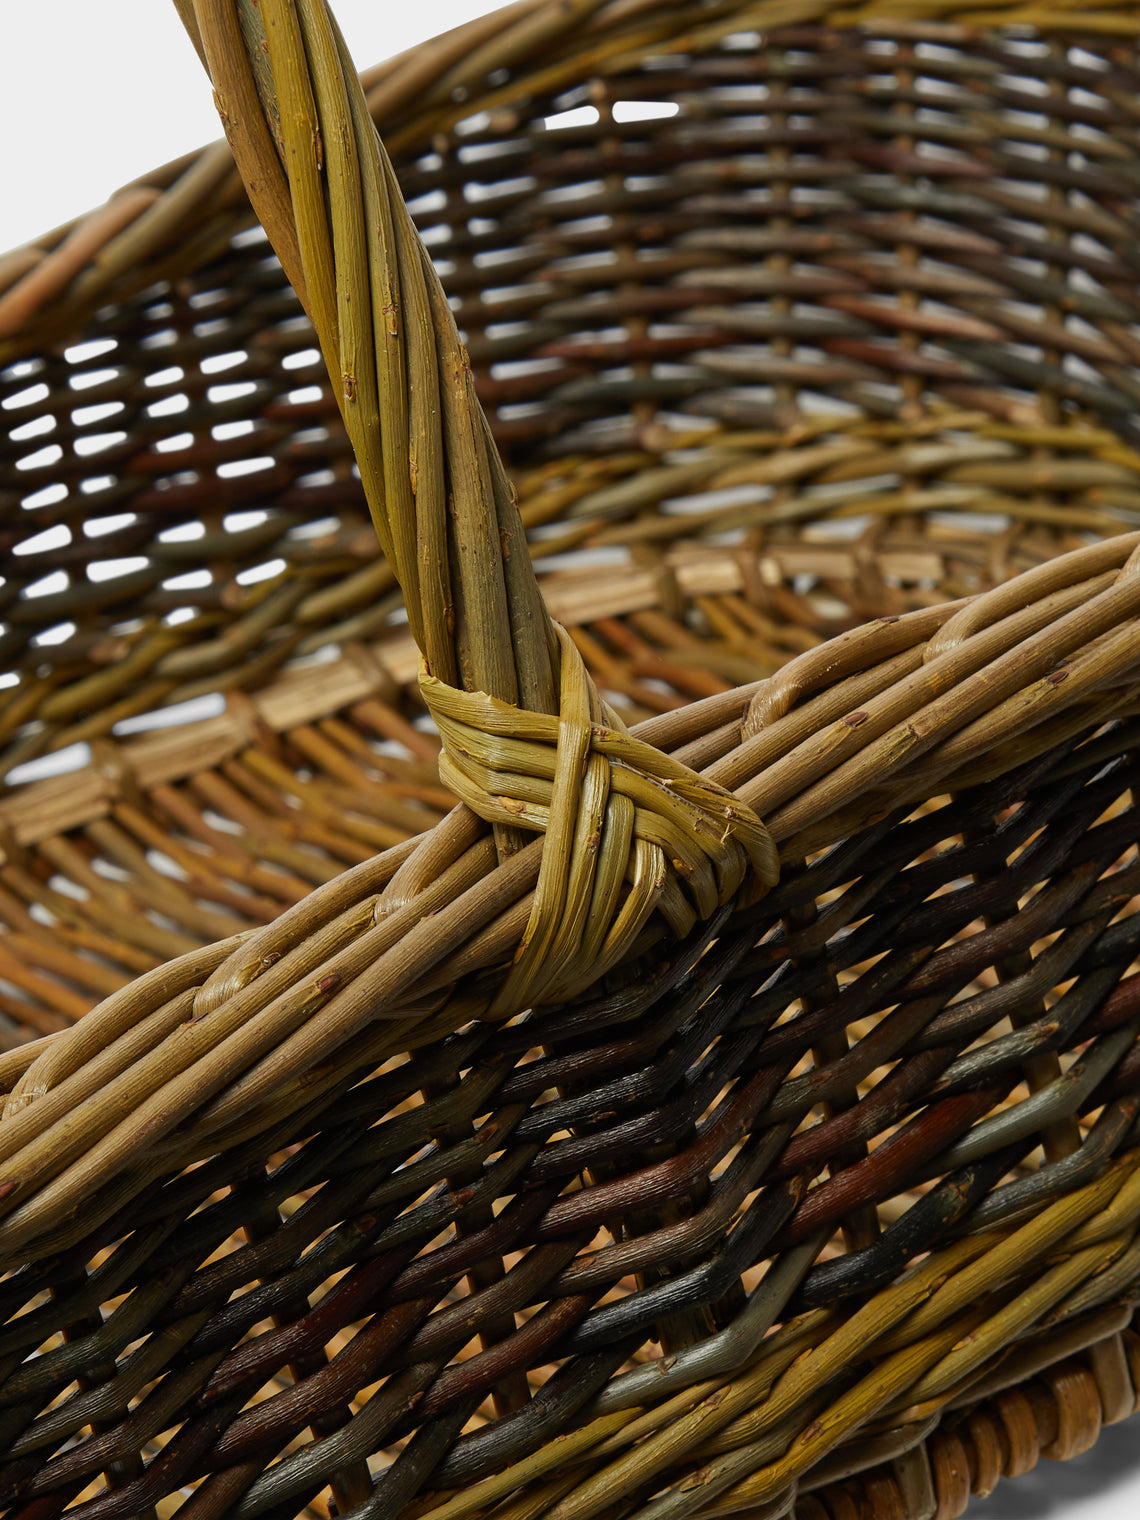 Benjamin Nauleau - Handwoven Willow Rectangular Basket -  - ABASK